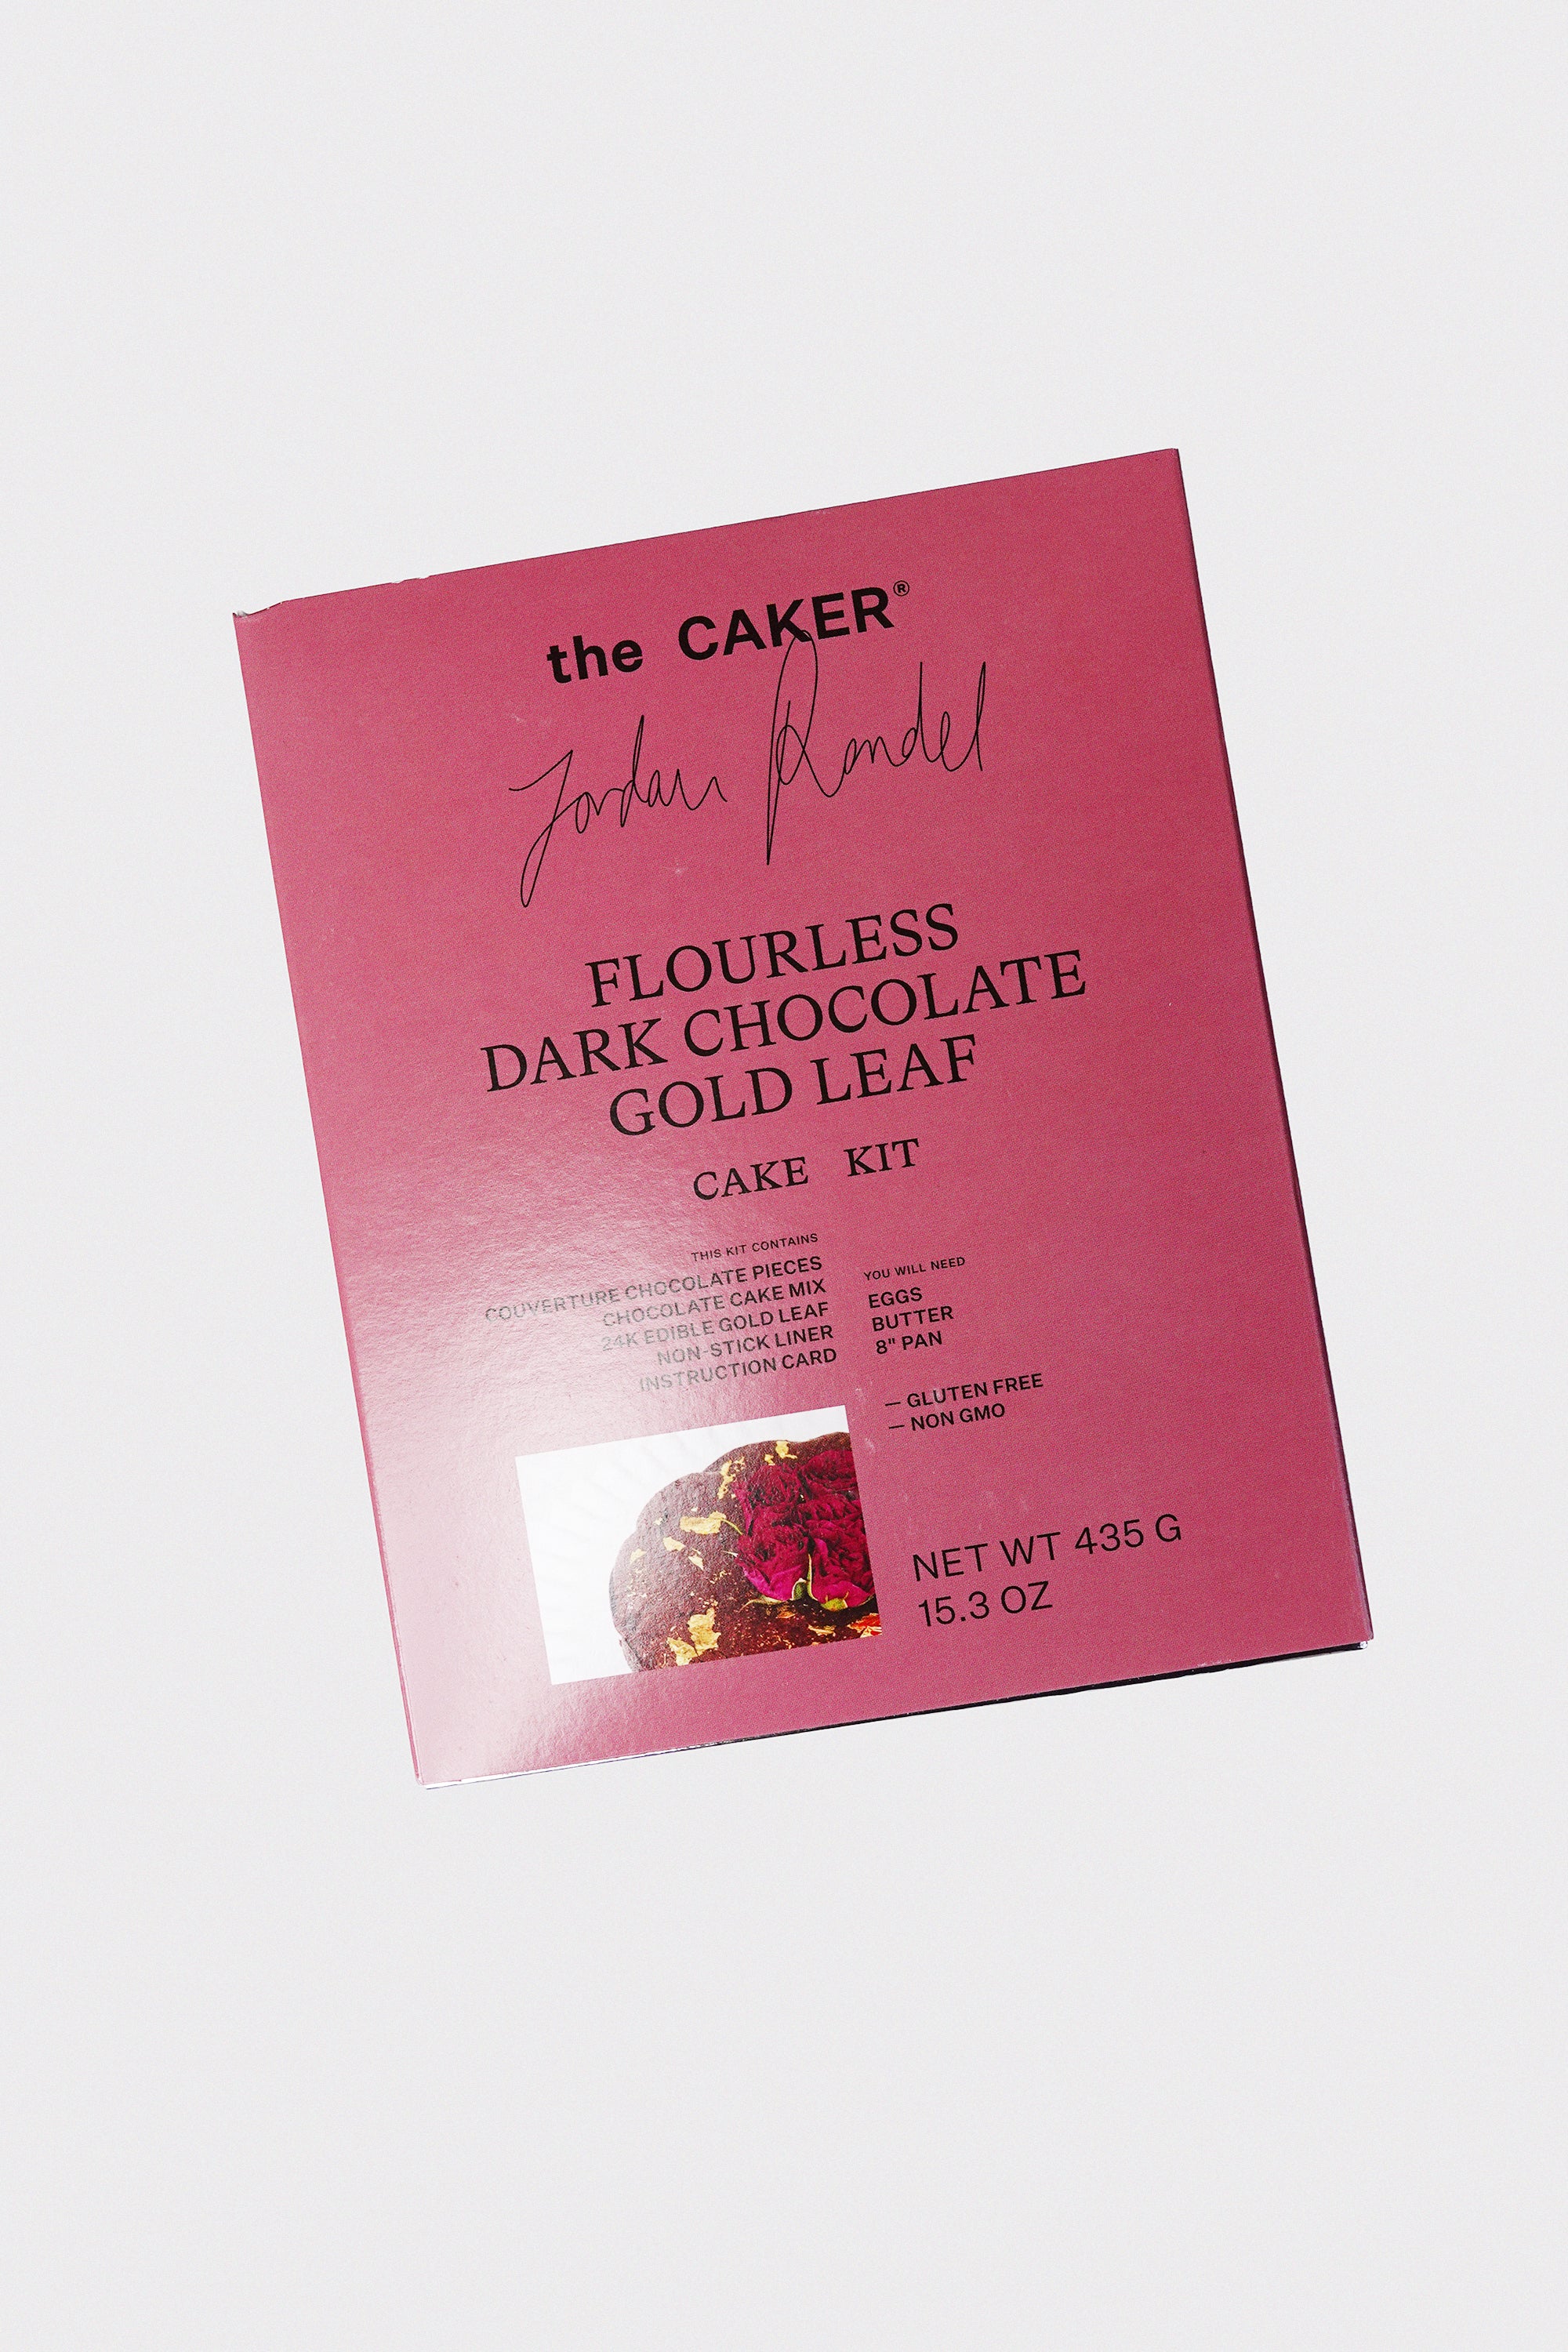 Flourless Dark Chocolate Gold Leaf Cake Kit by The Caker